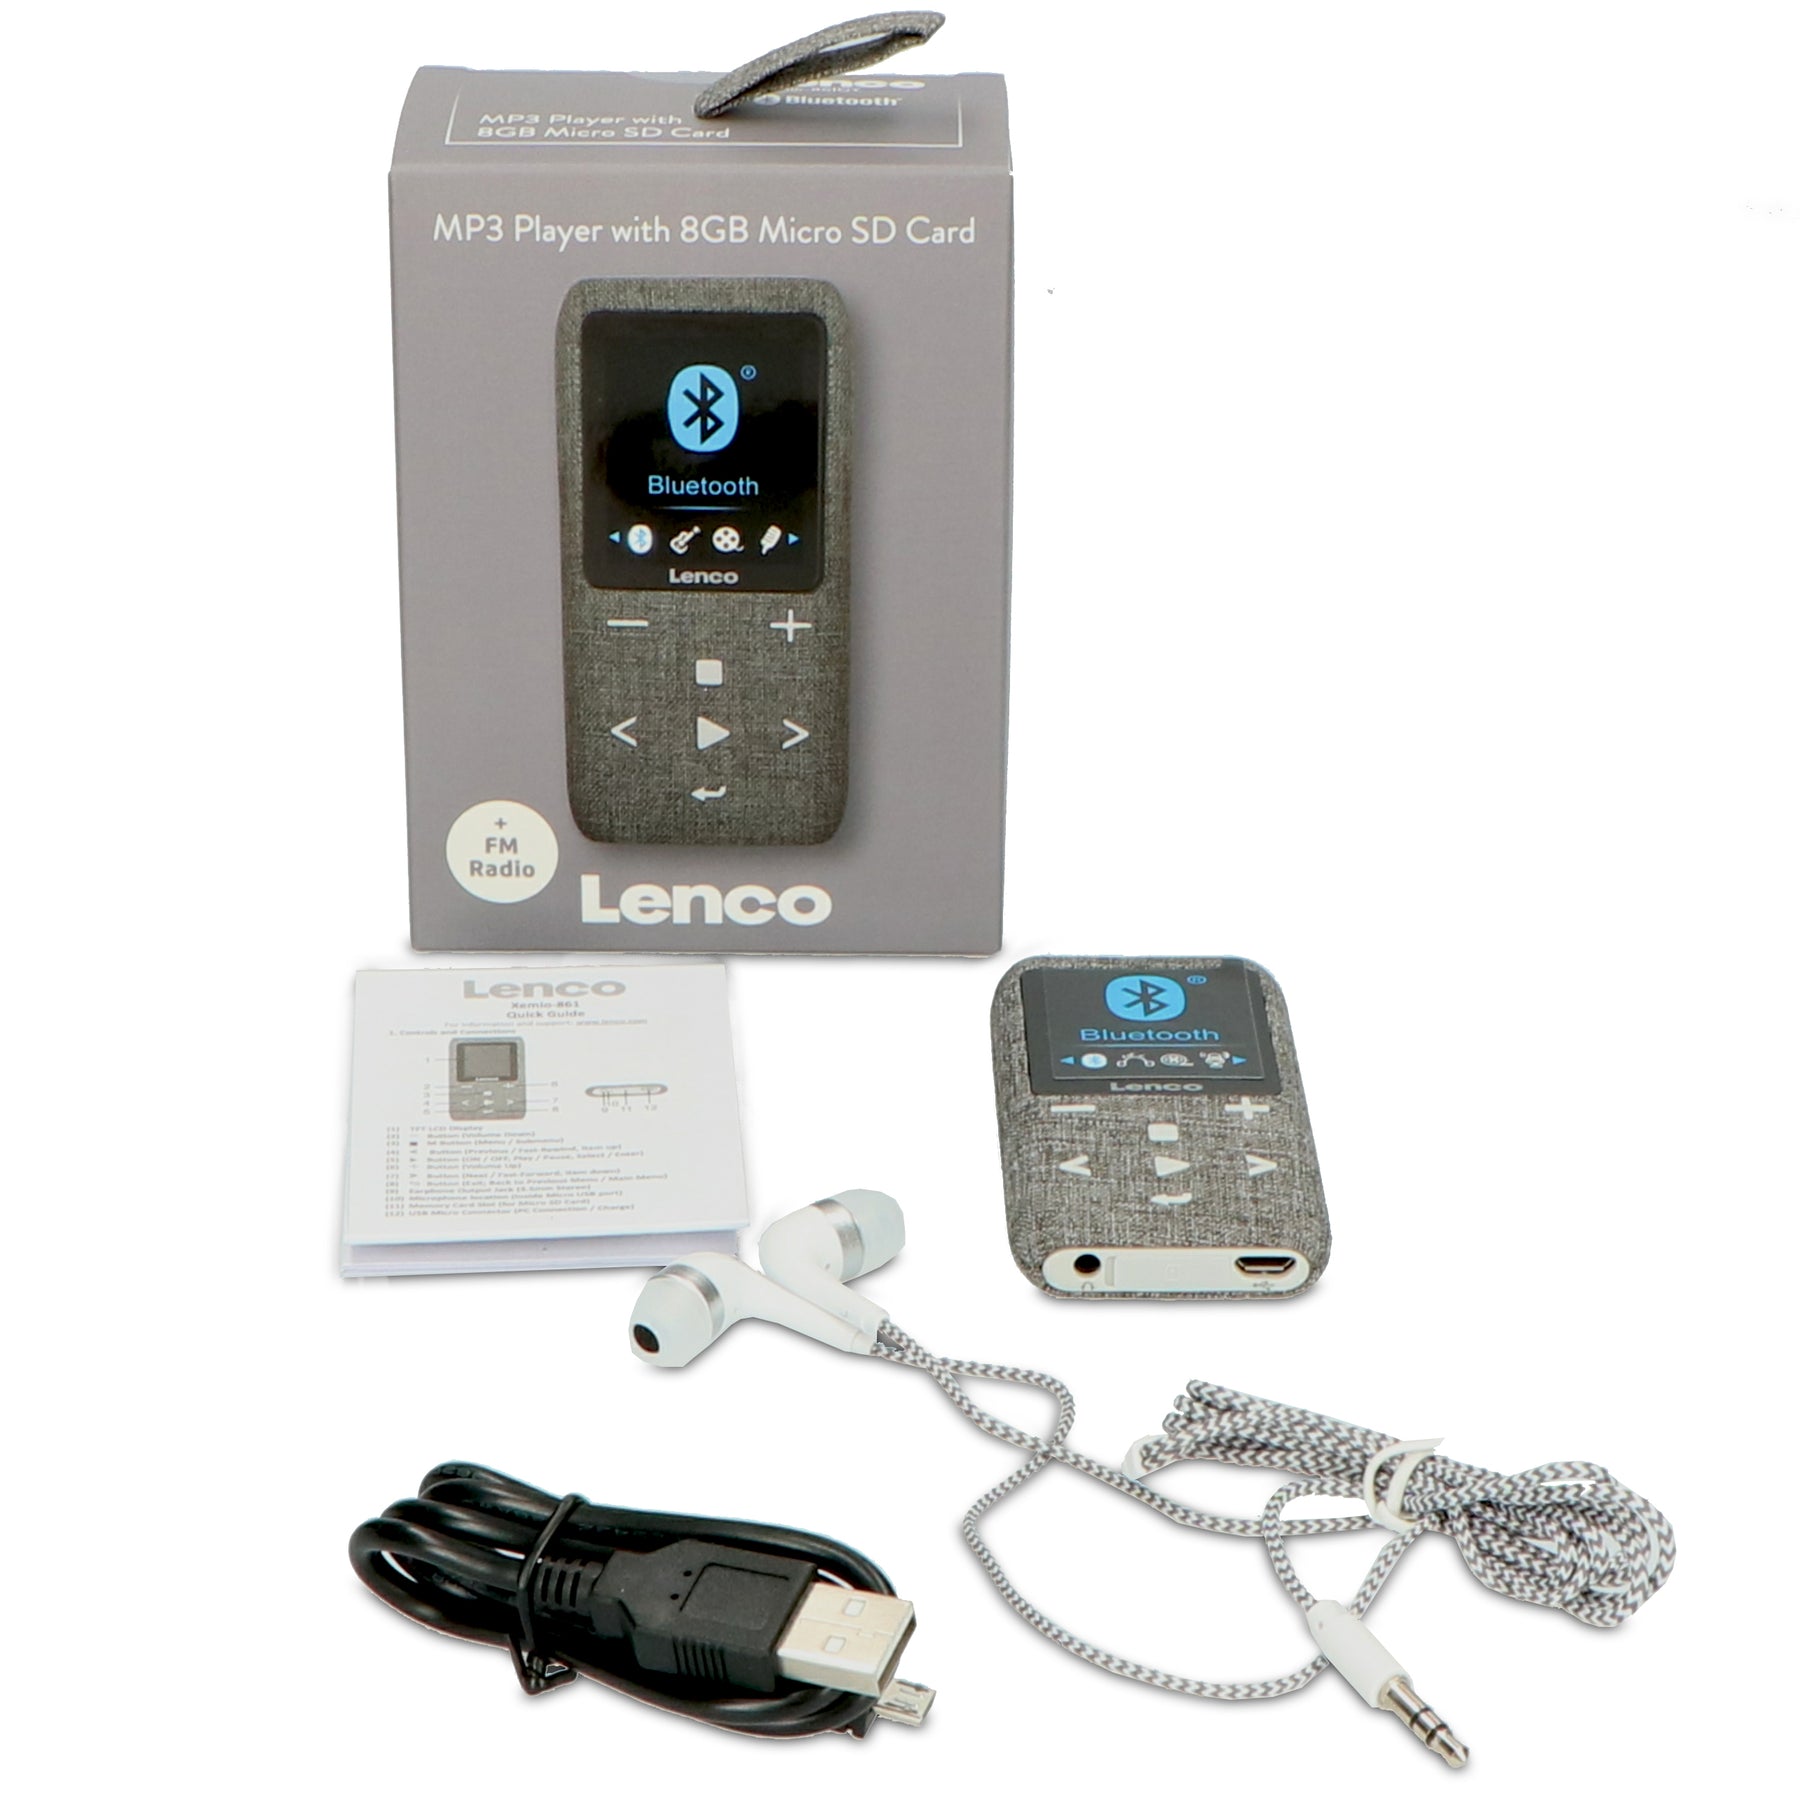 Grey MP3/MP4 Micro Bluetooth® SD 8GB - with Card LENCO Xemio-861GY Player -